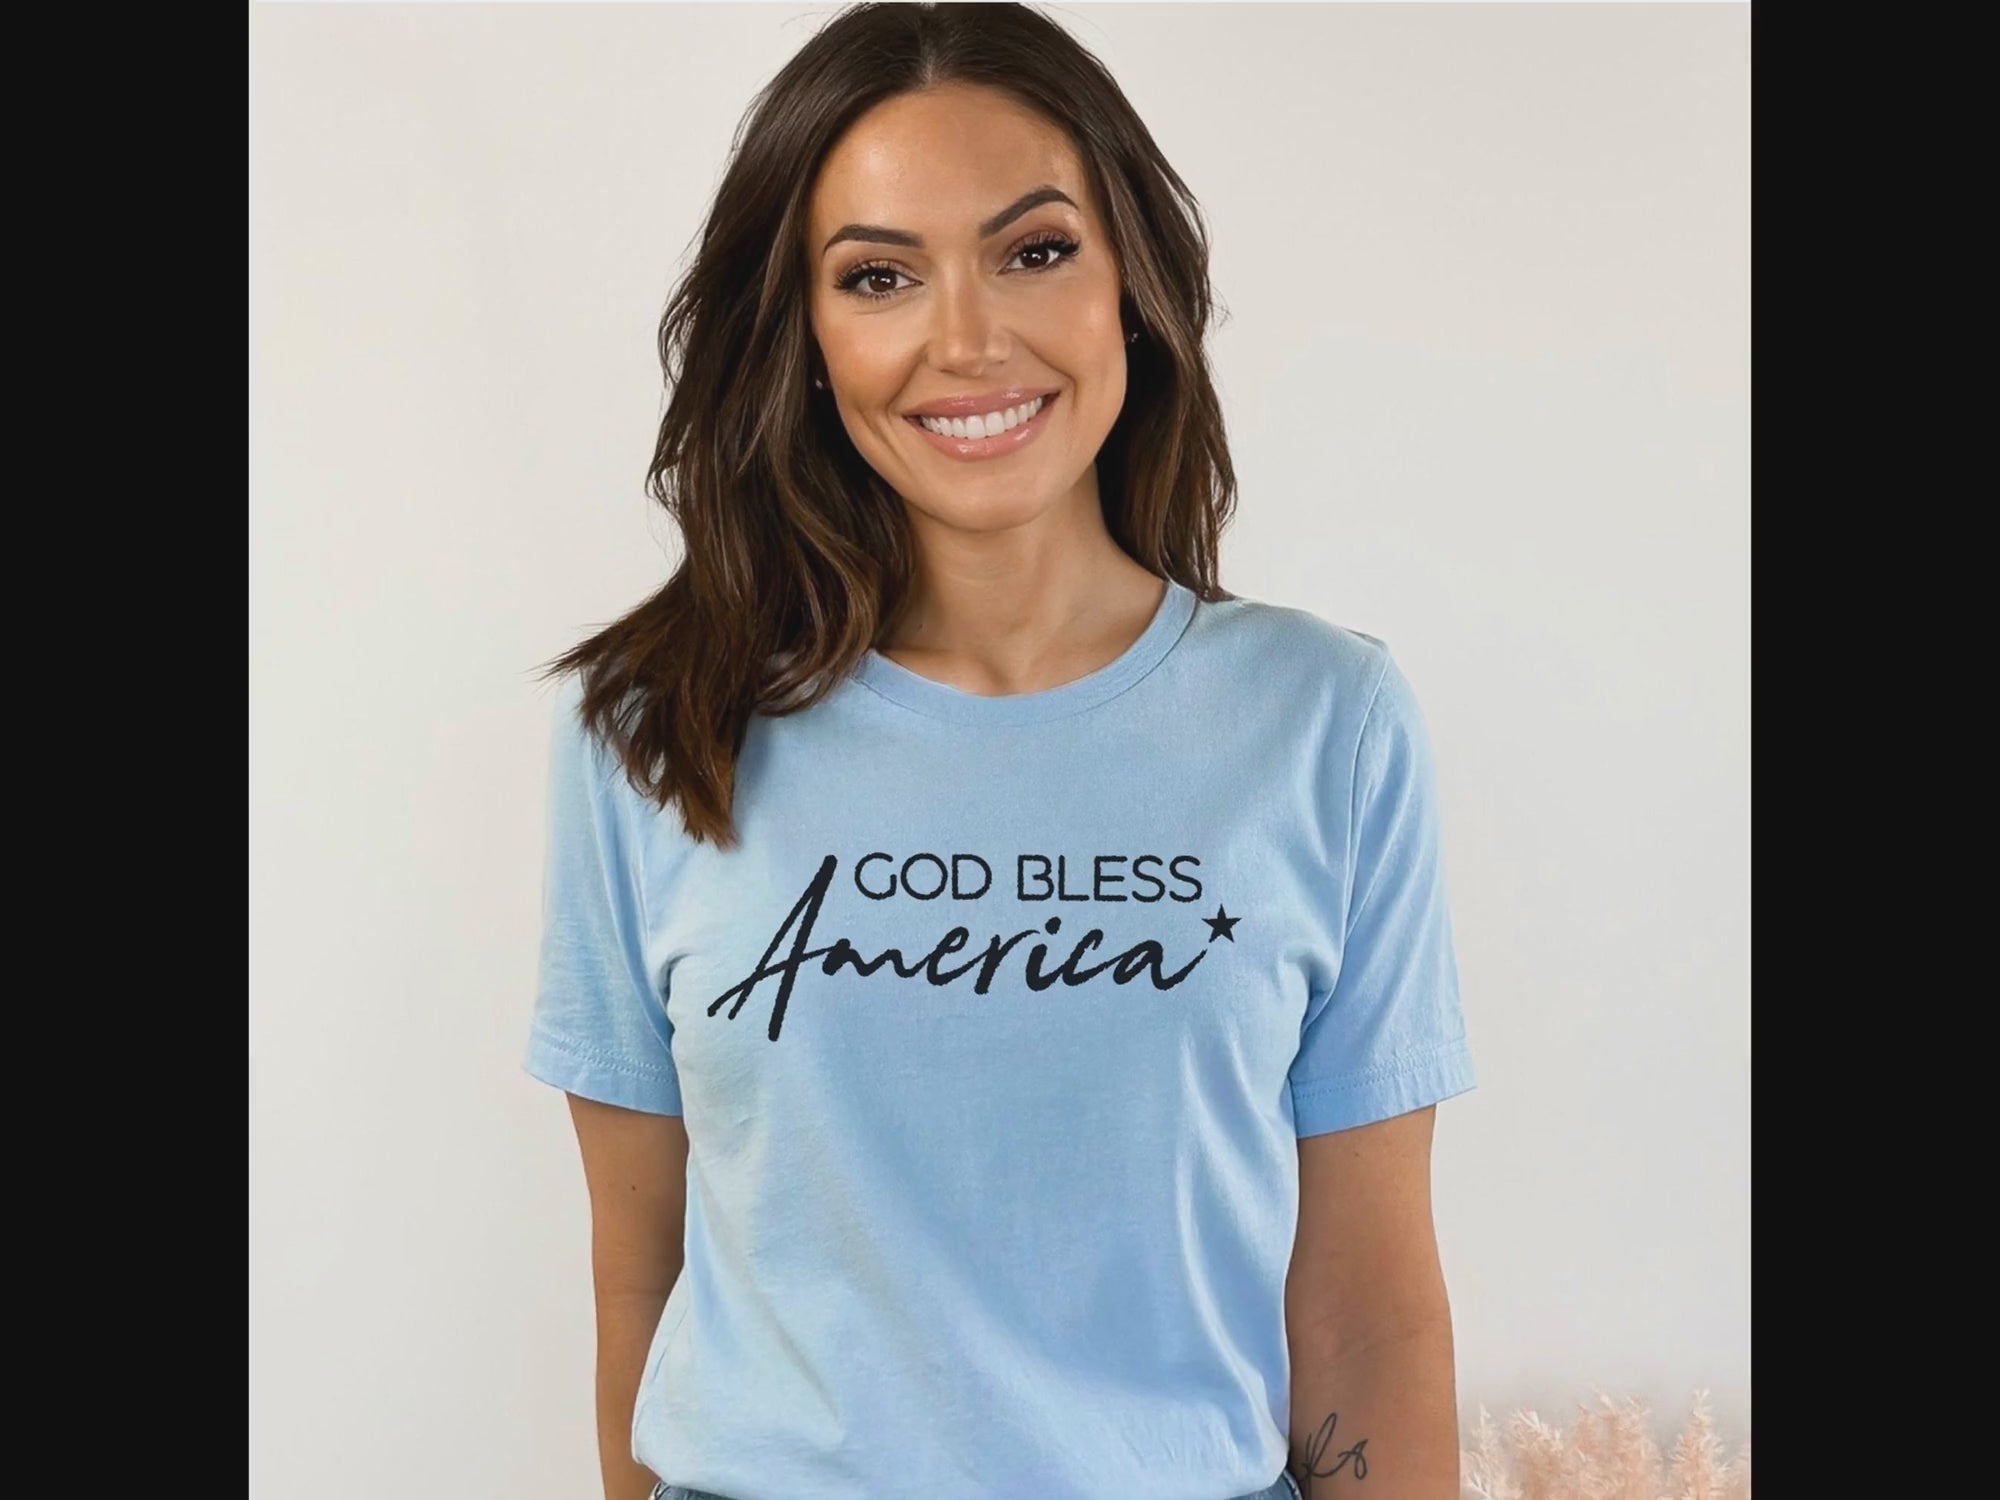 God Bless America Women's Short Sleeve Patriotic T-shirt Size: XS Color: Baby Blue Jesus Passion Apparel